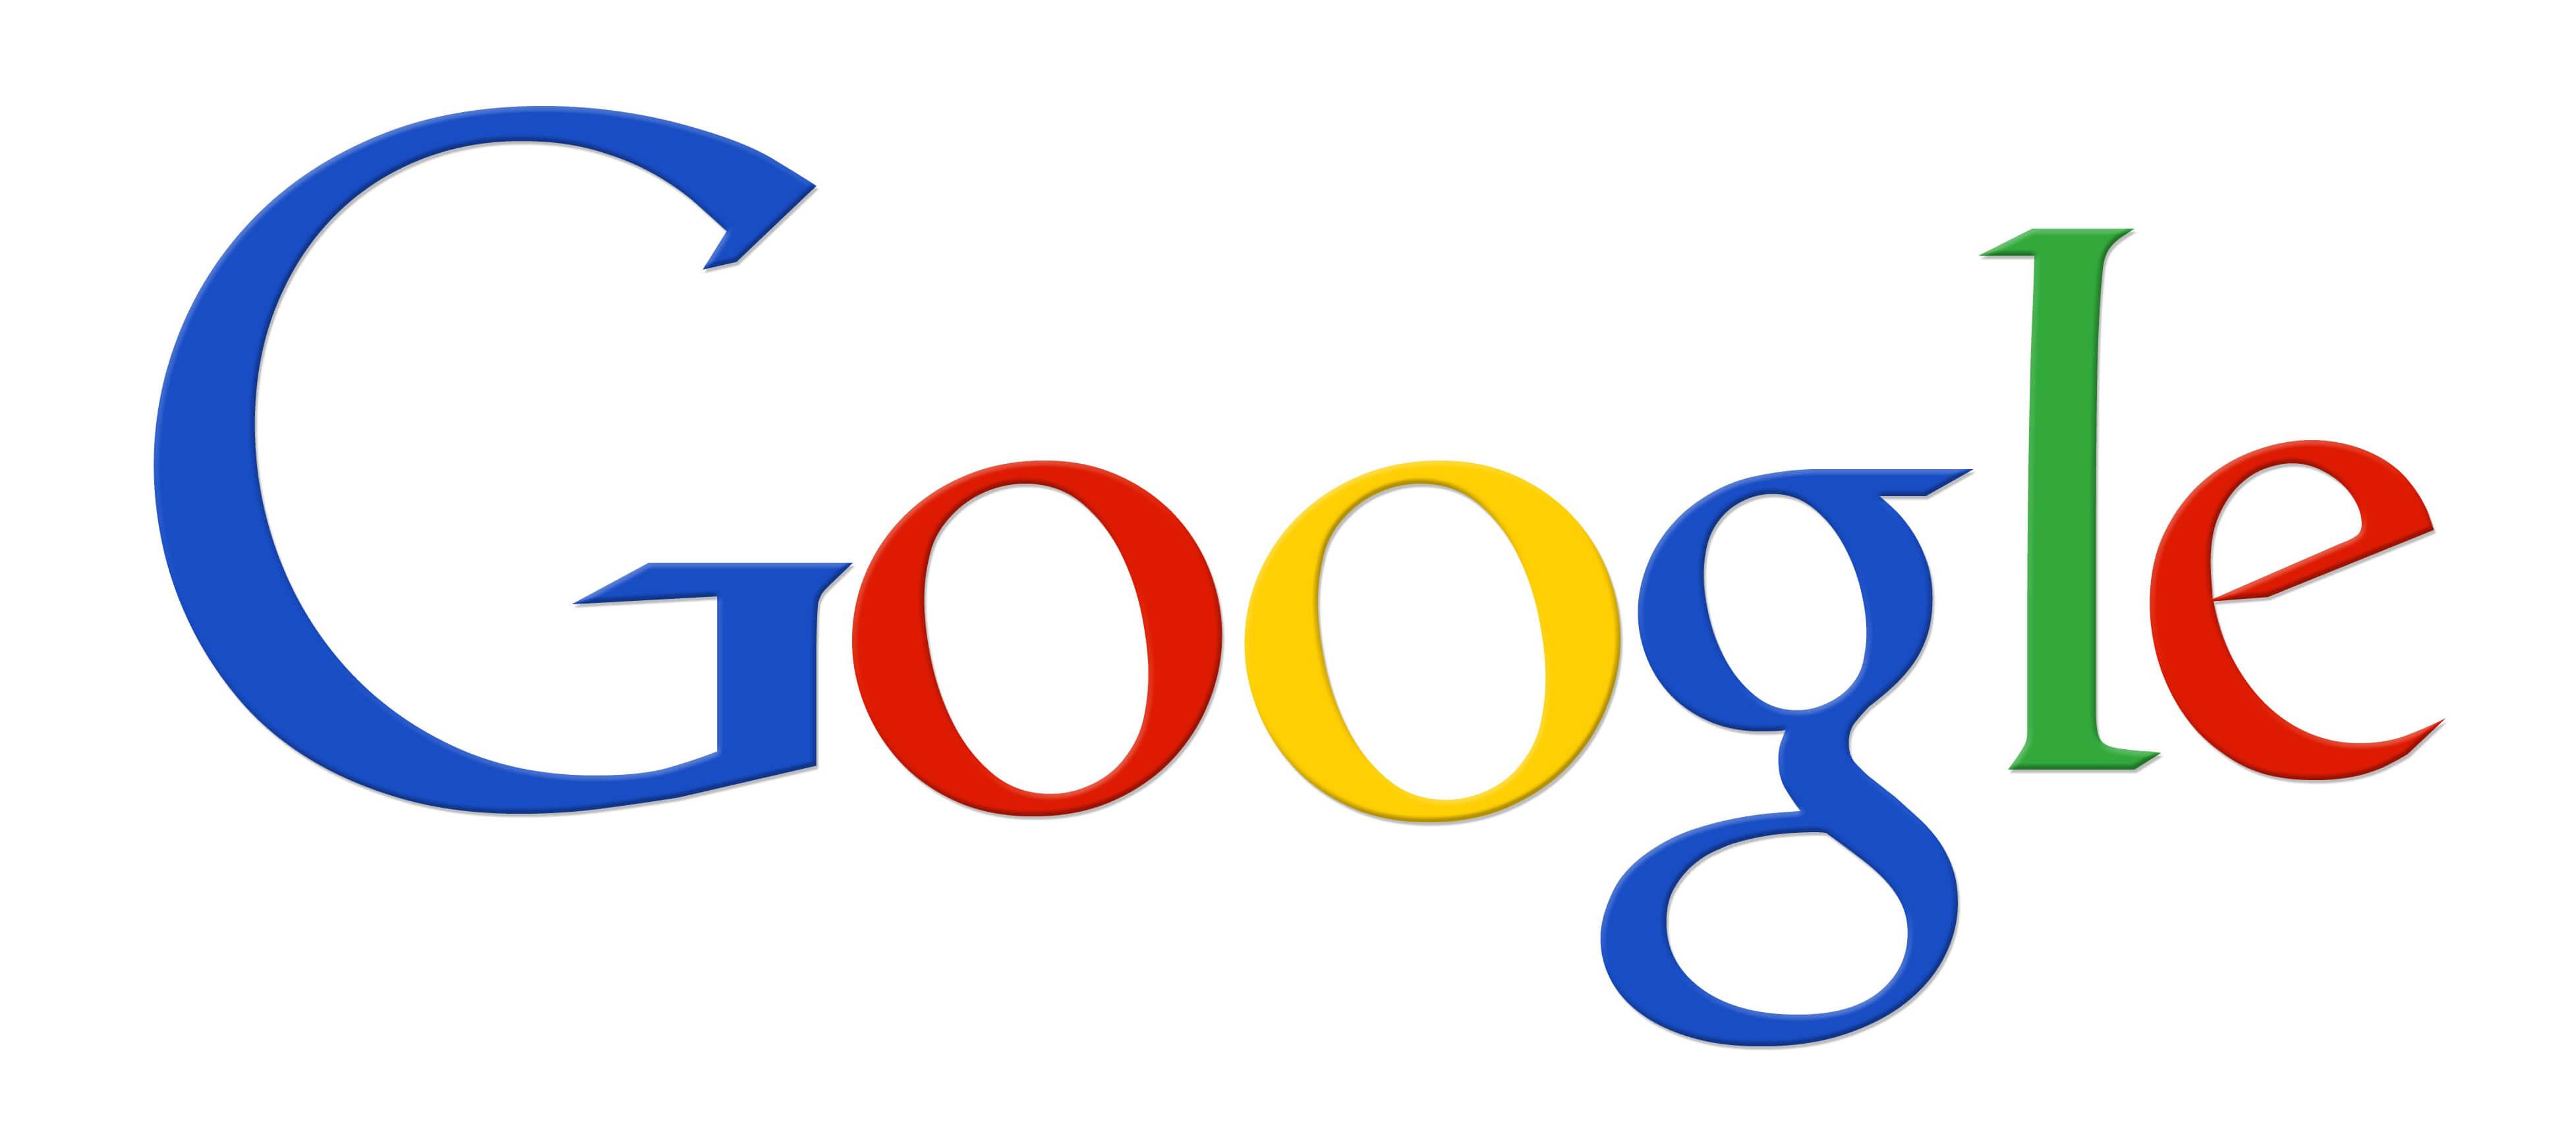 Google 2018 Logo - EU To Fine Google Billions Over Android